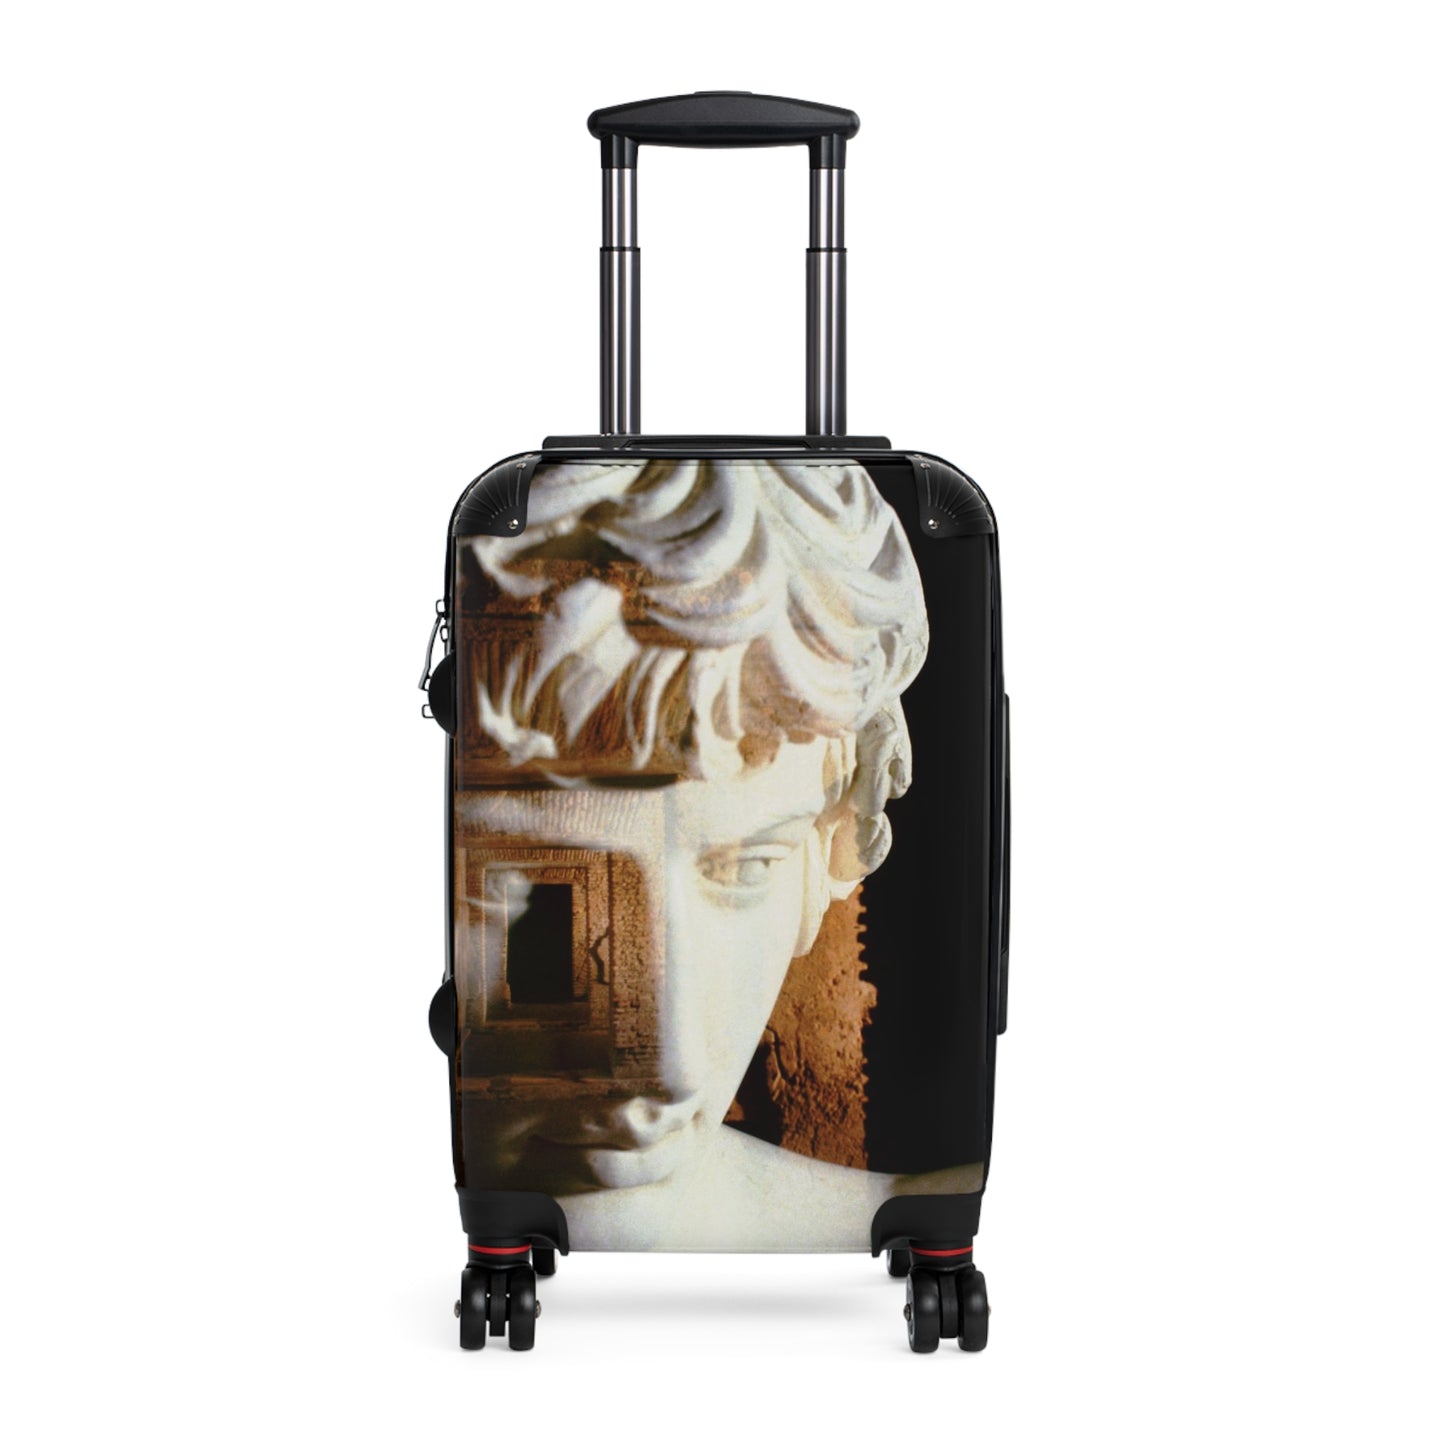 Antinoo In The Hadrian's Villa Luggage